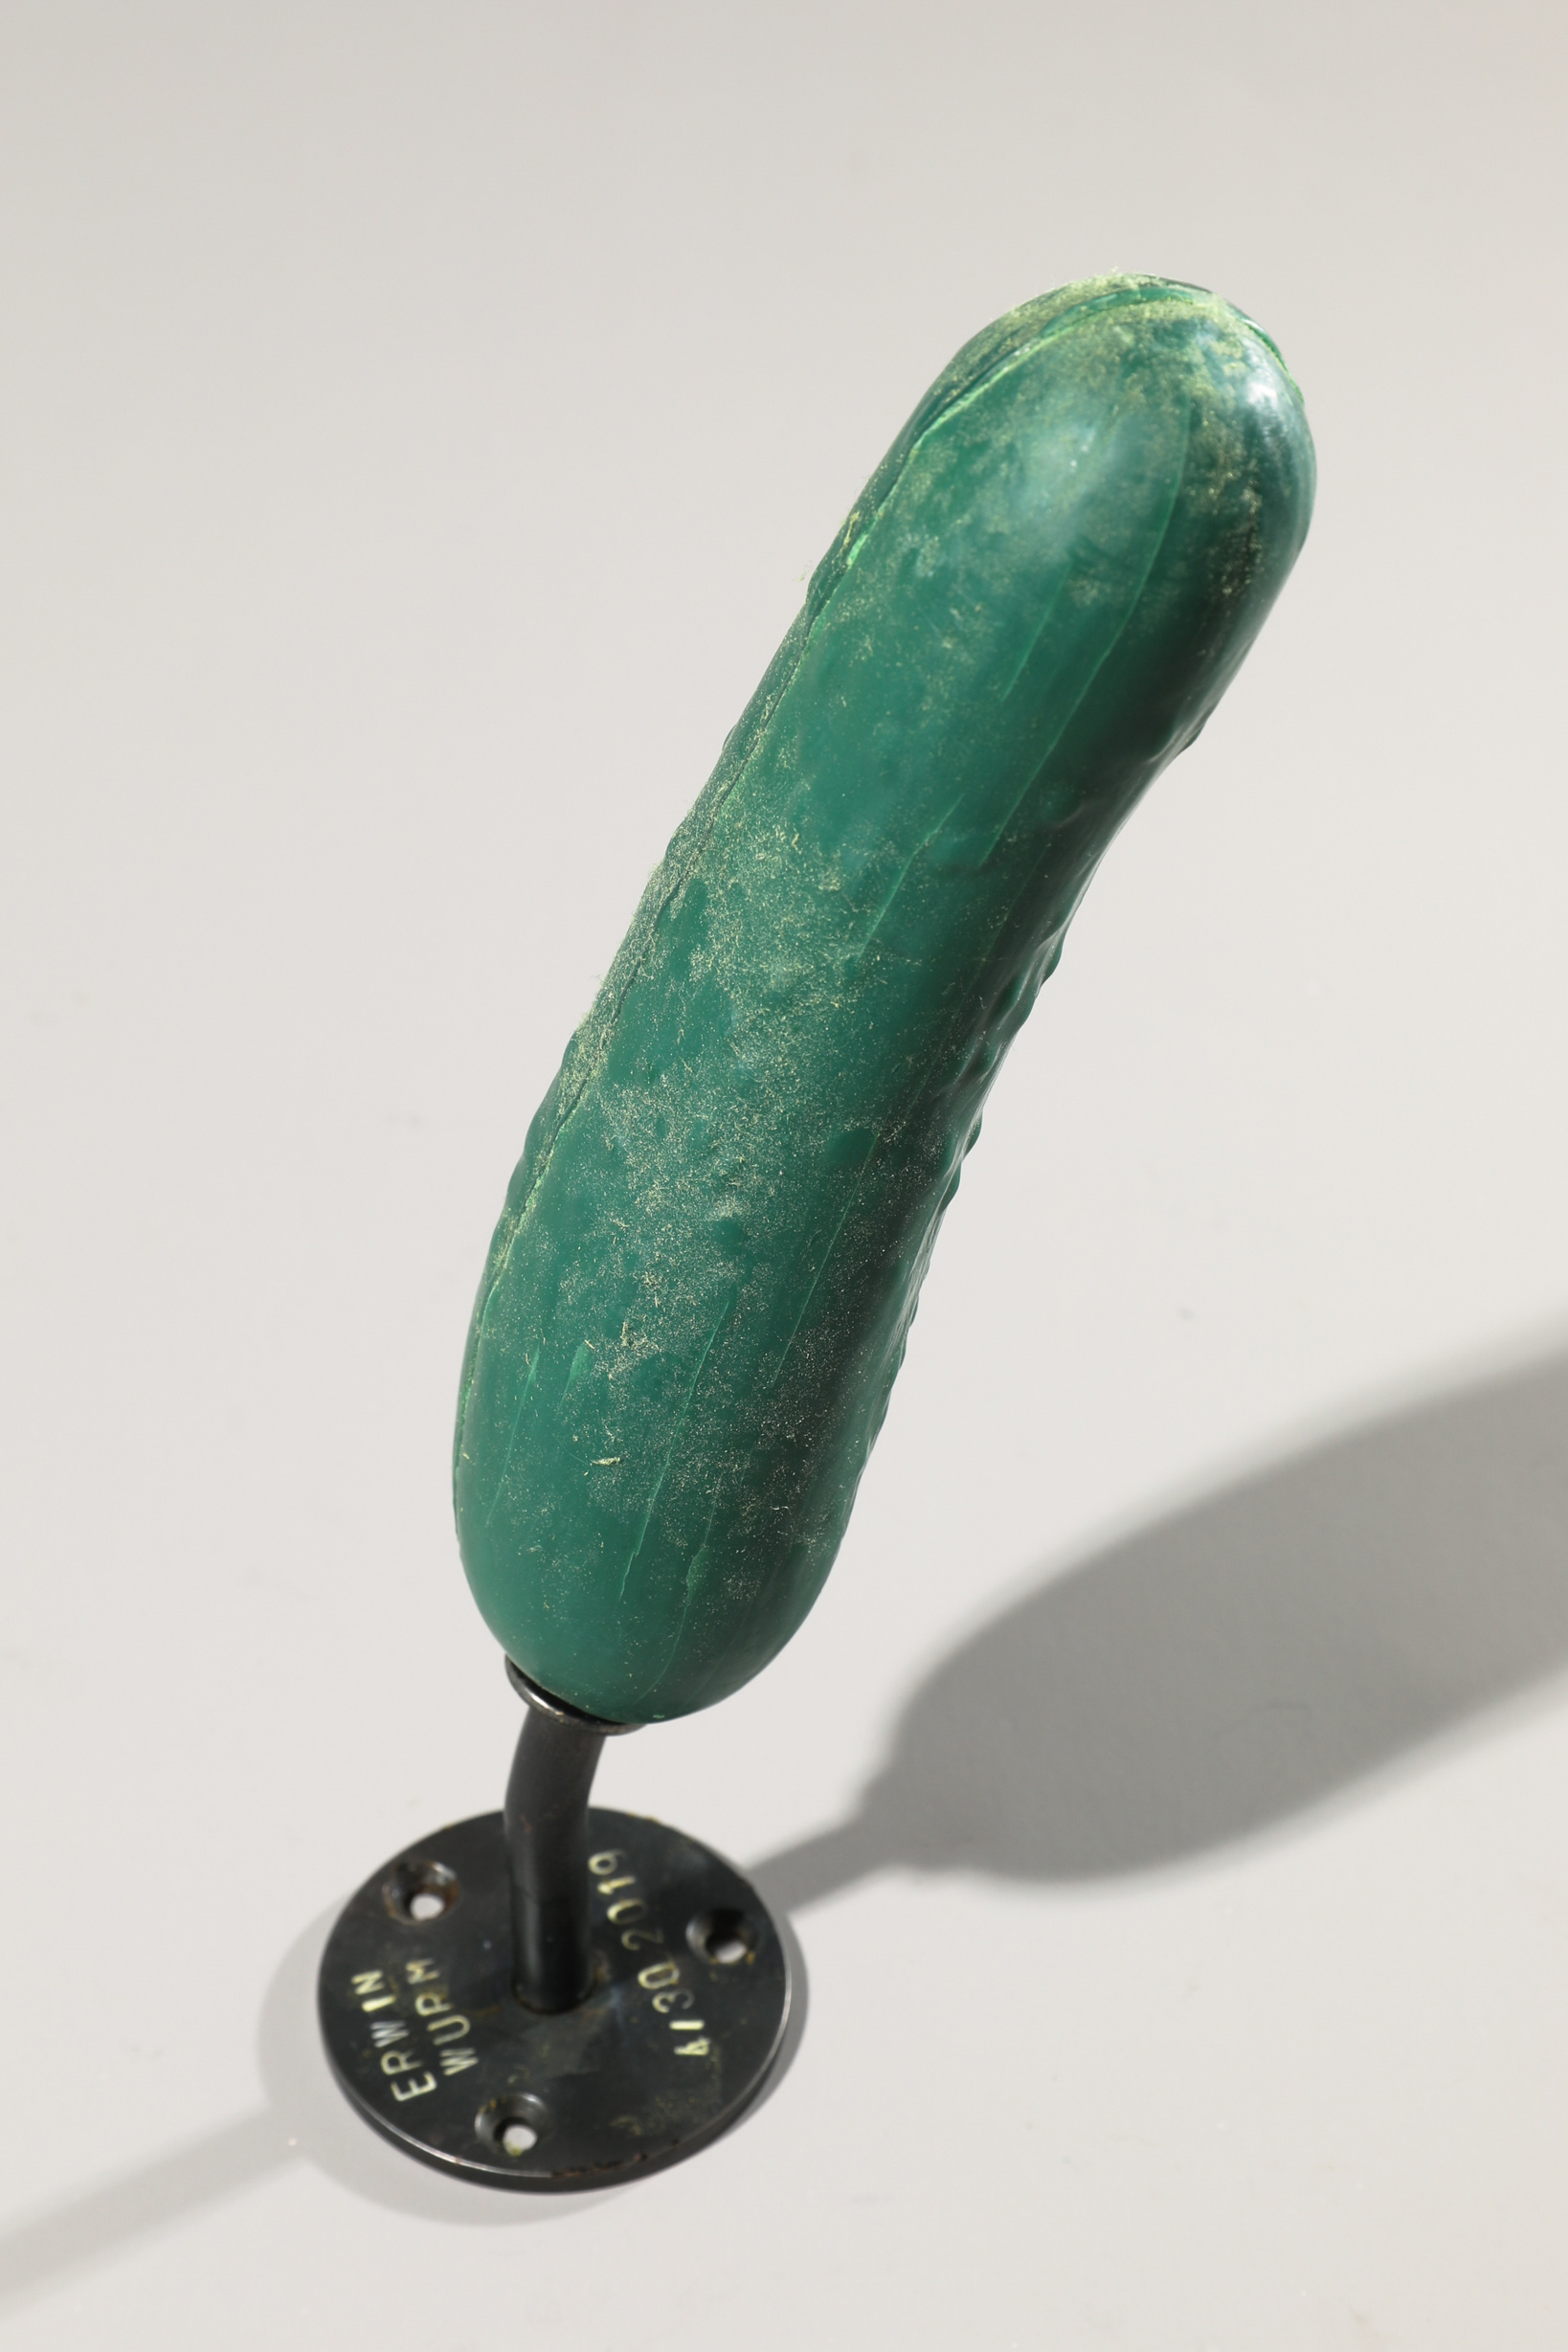 Erwin Wurm*, Untitled, 2019, Sculpture cucumber, soap - Image 2 of 5